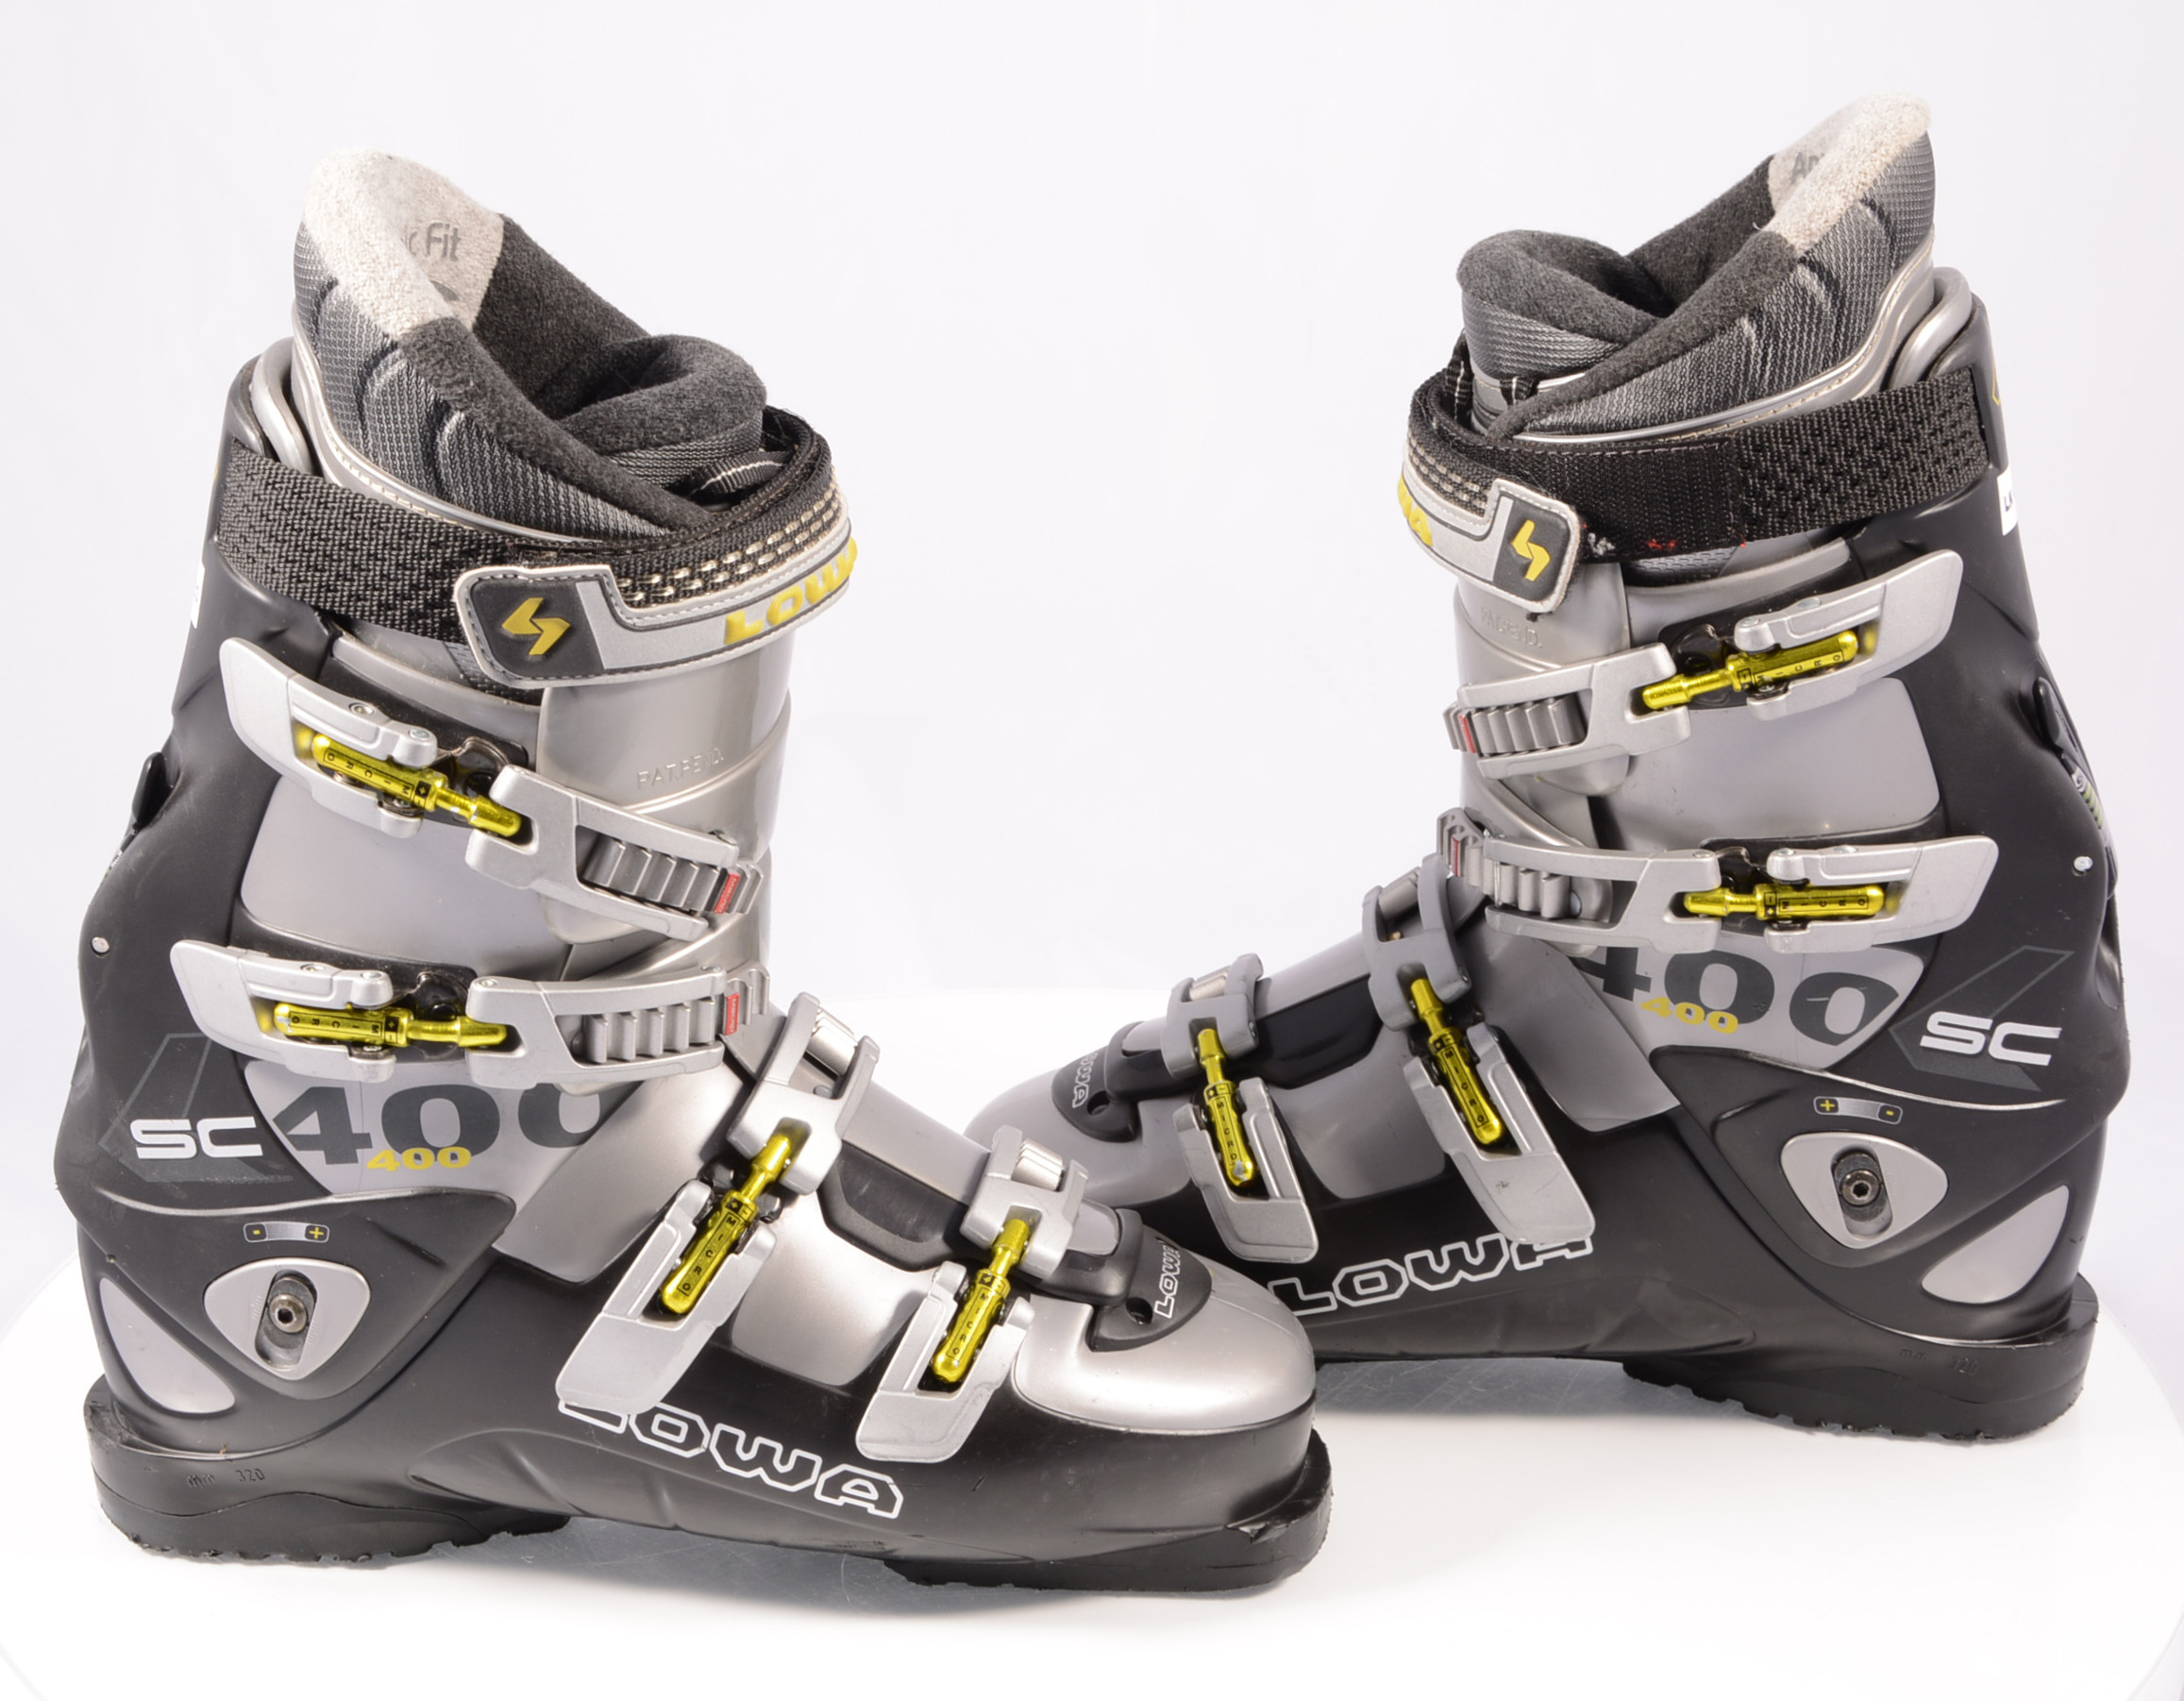 ski boots LOWA SC 400, Anatomic fit, Easy SKI/WALK, Canting, micro - Mardosport.com